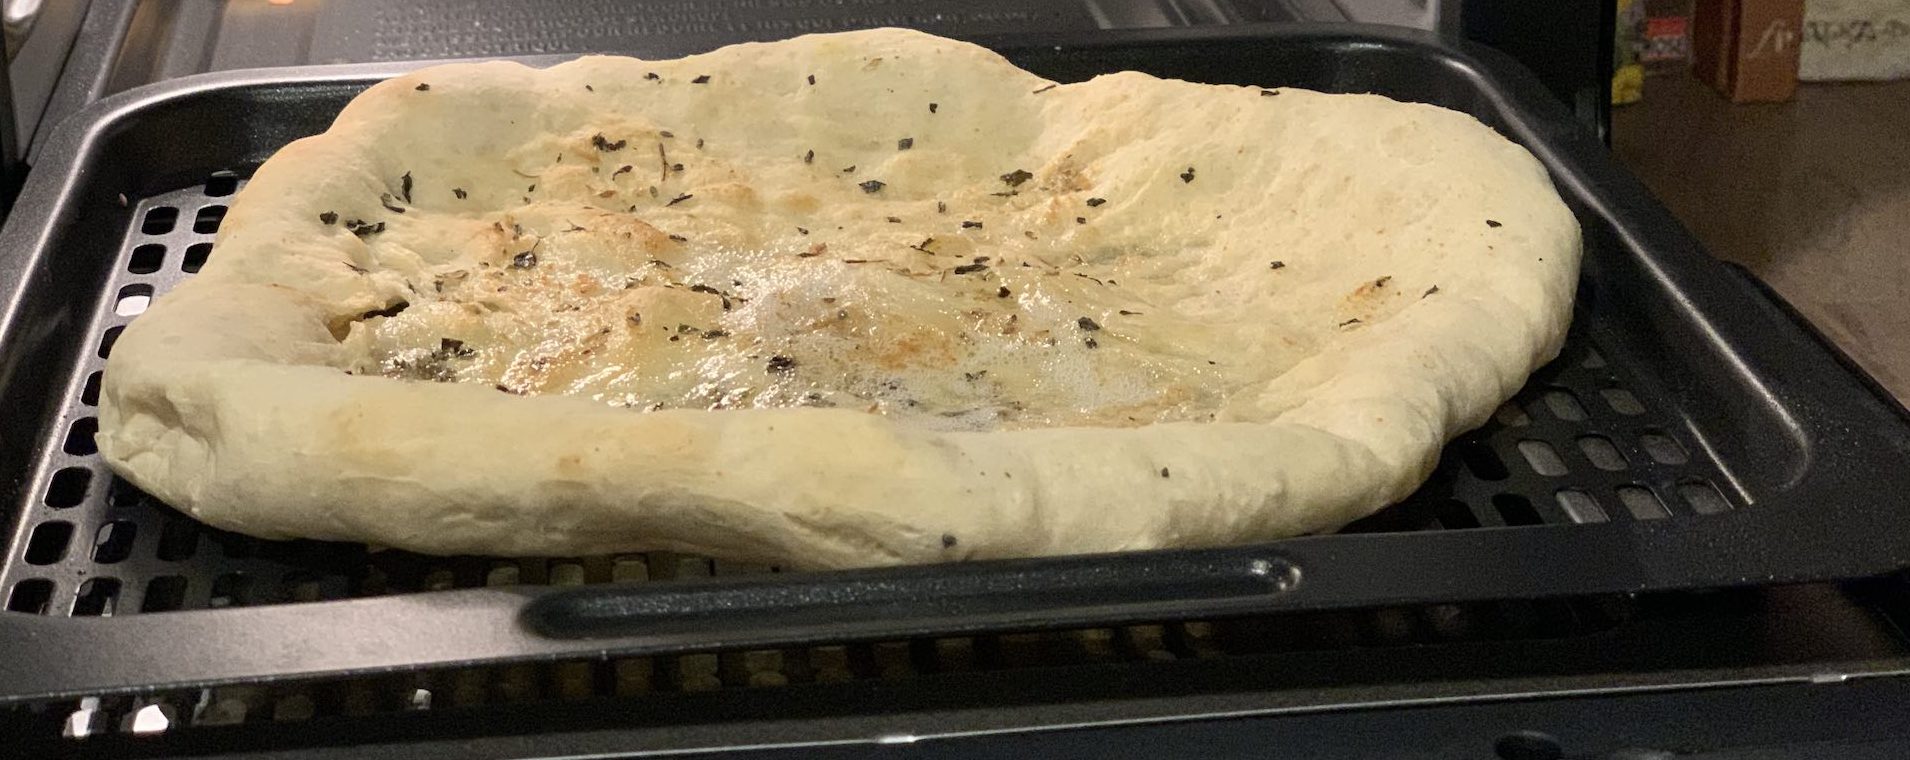 Pizza bread in air fryer